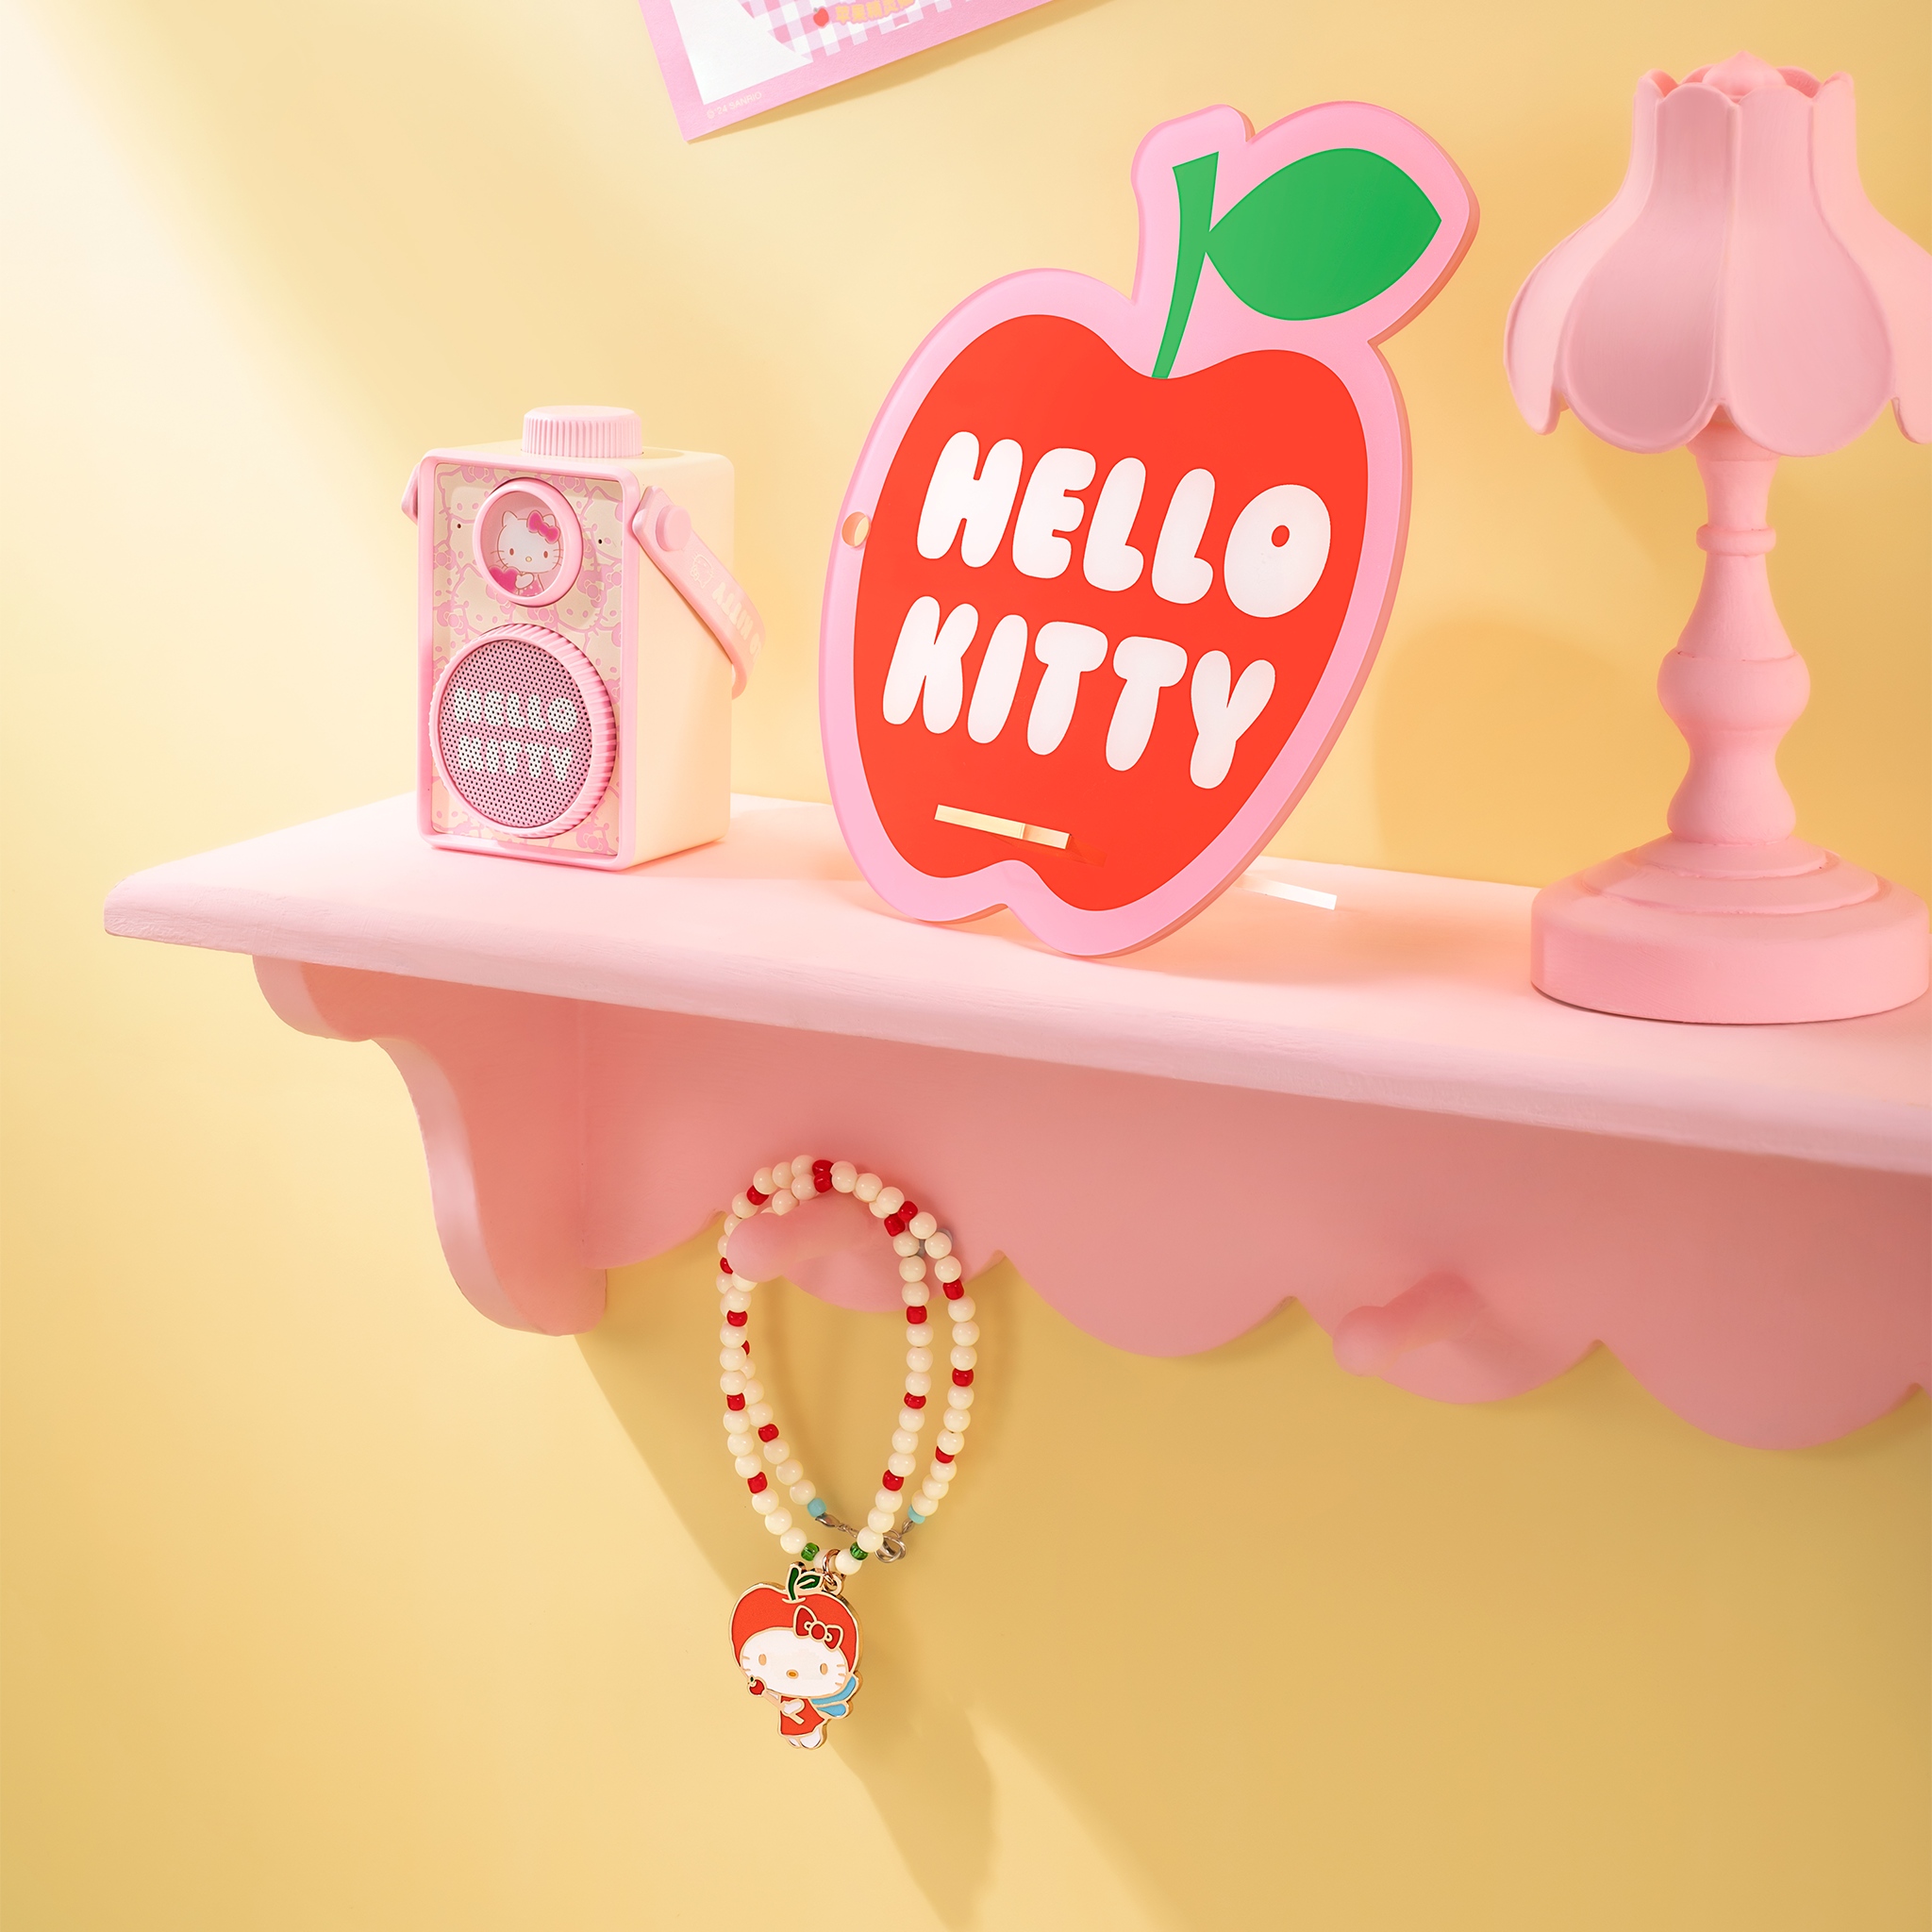 MarTUBE x Sanrio Hello Kitty Apple Fairy Jewelry Gift Set for Girl